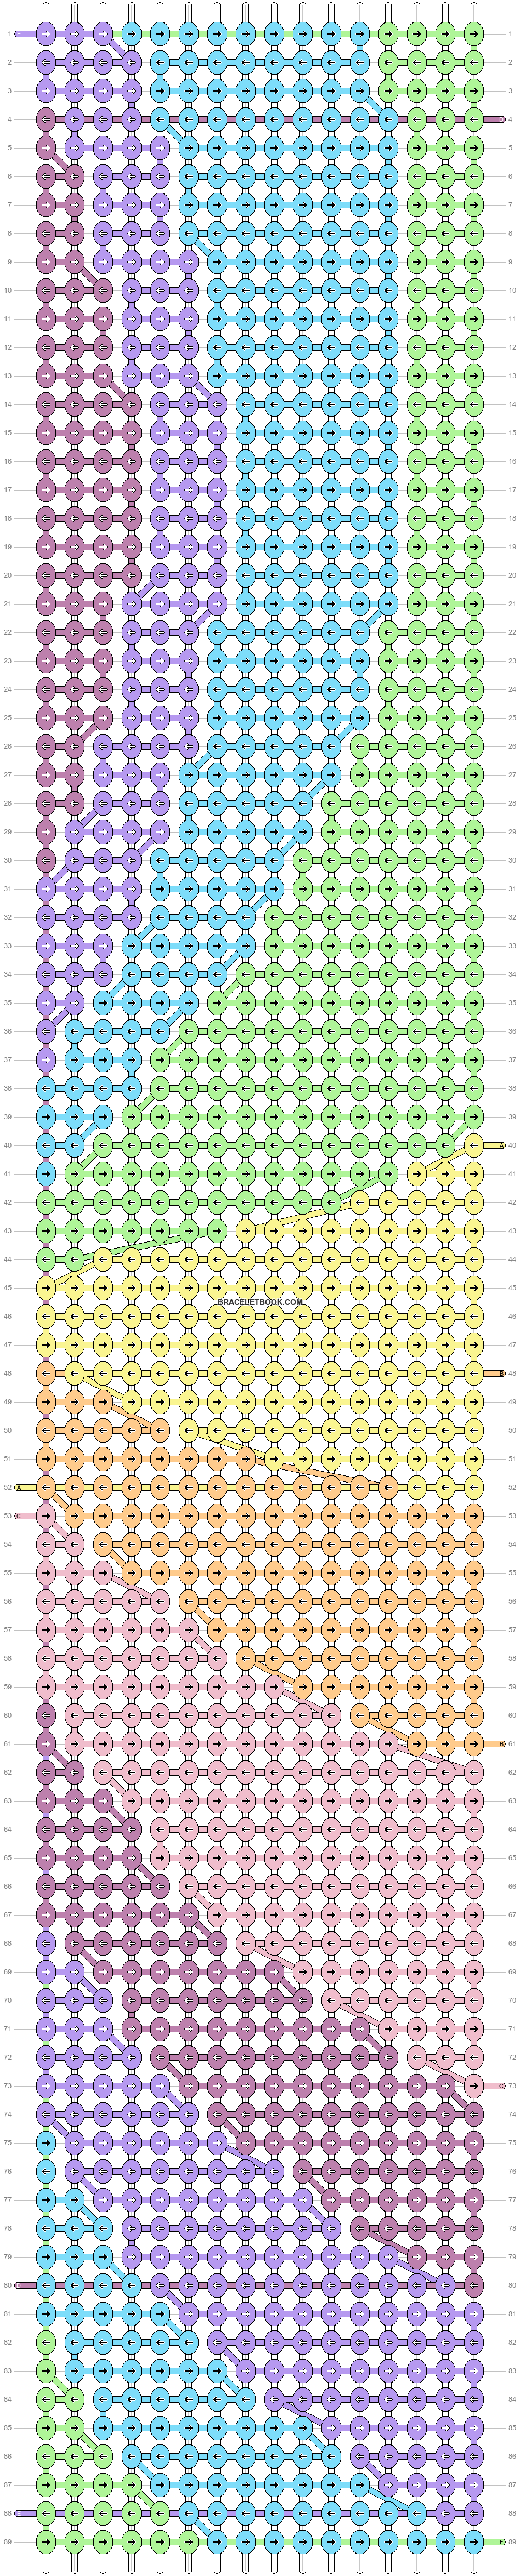 Alpha pattern #62816 variation #114768 pattern